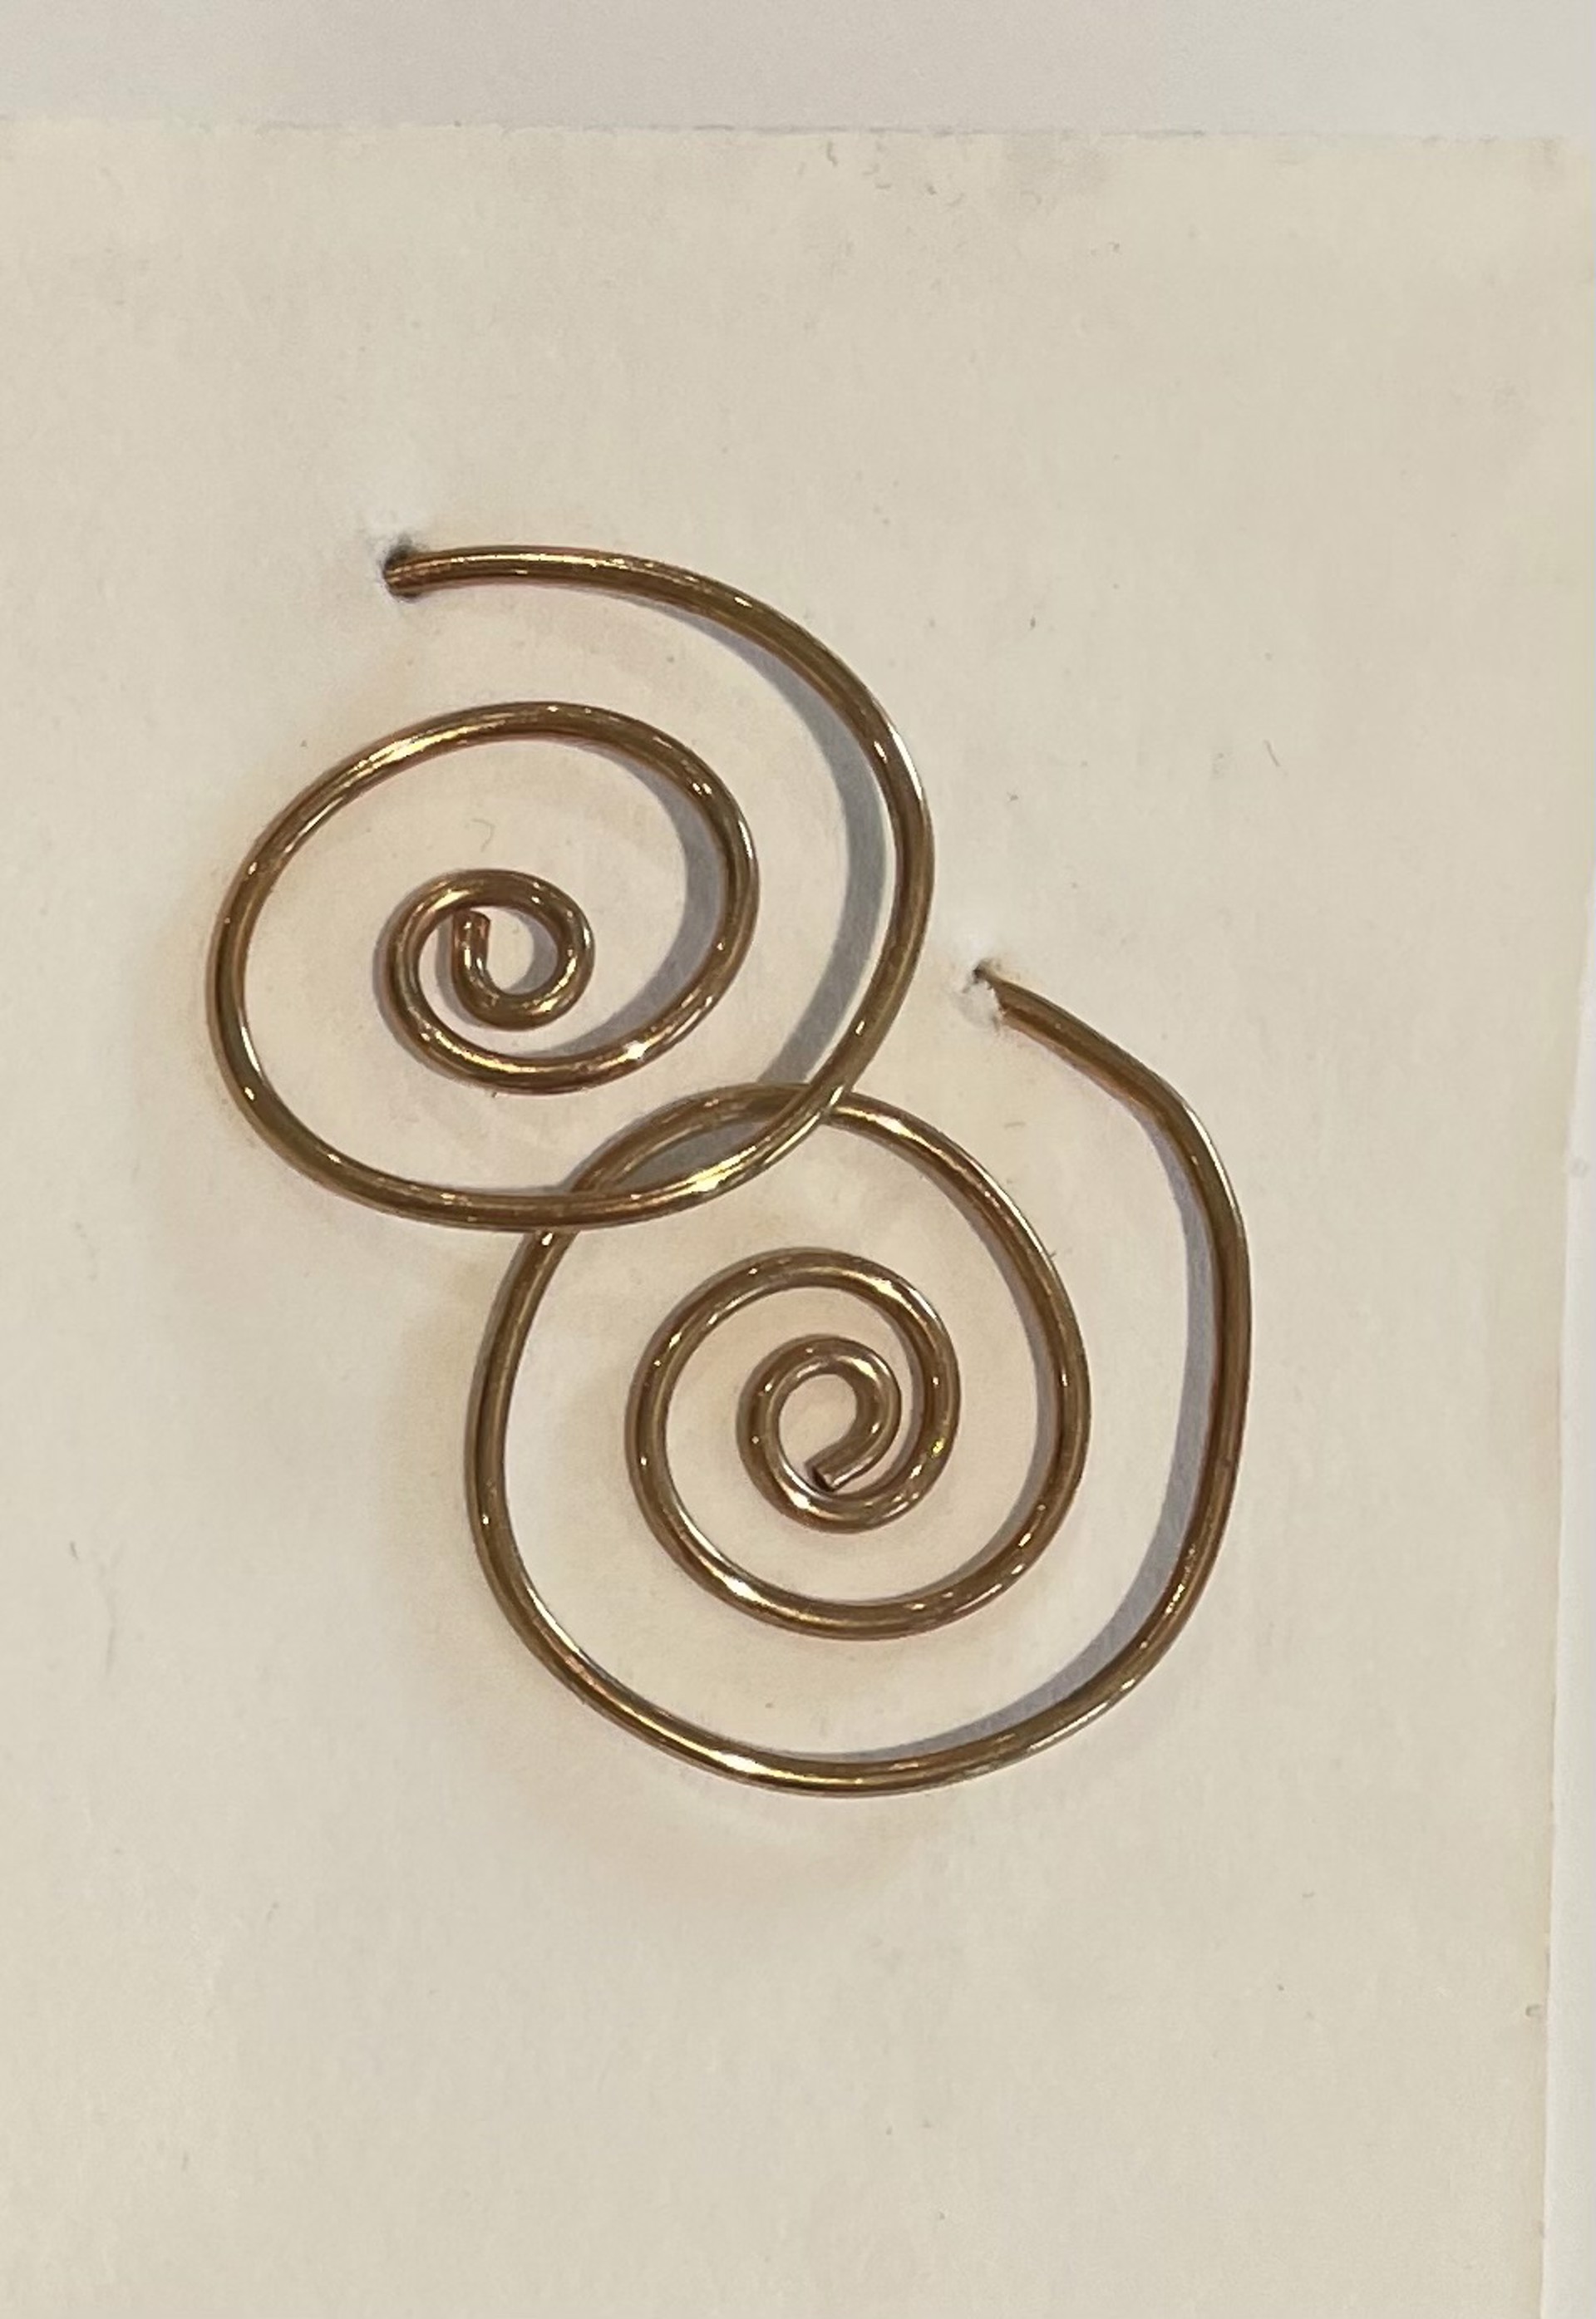 Gold Filled Spiral Earrings by Emelie Hebert